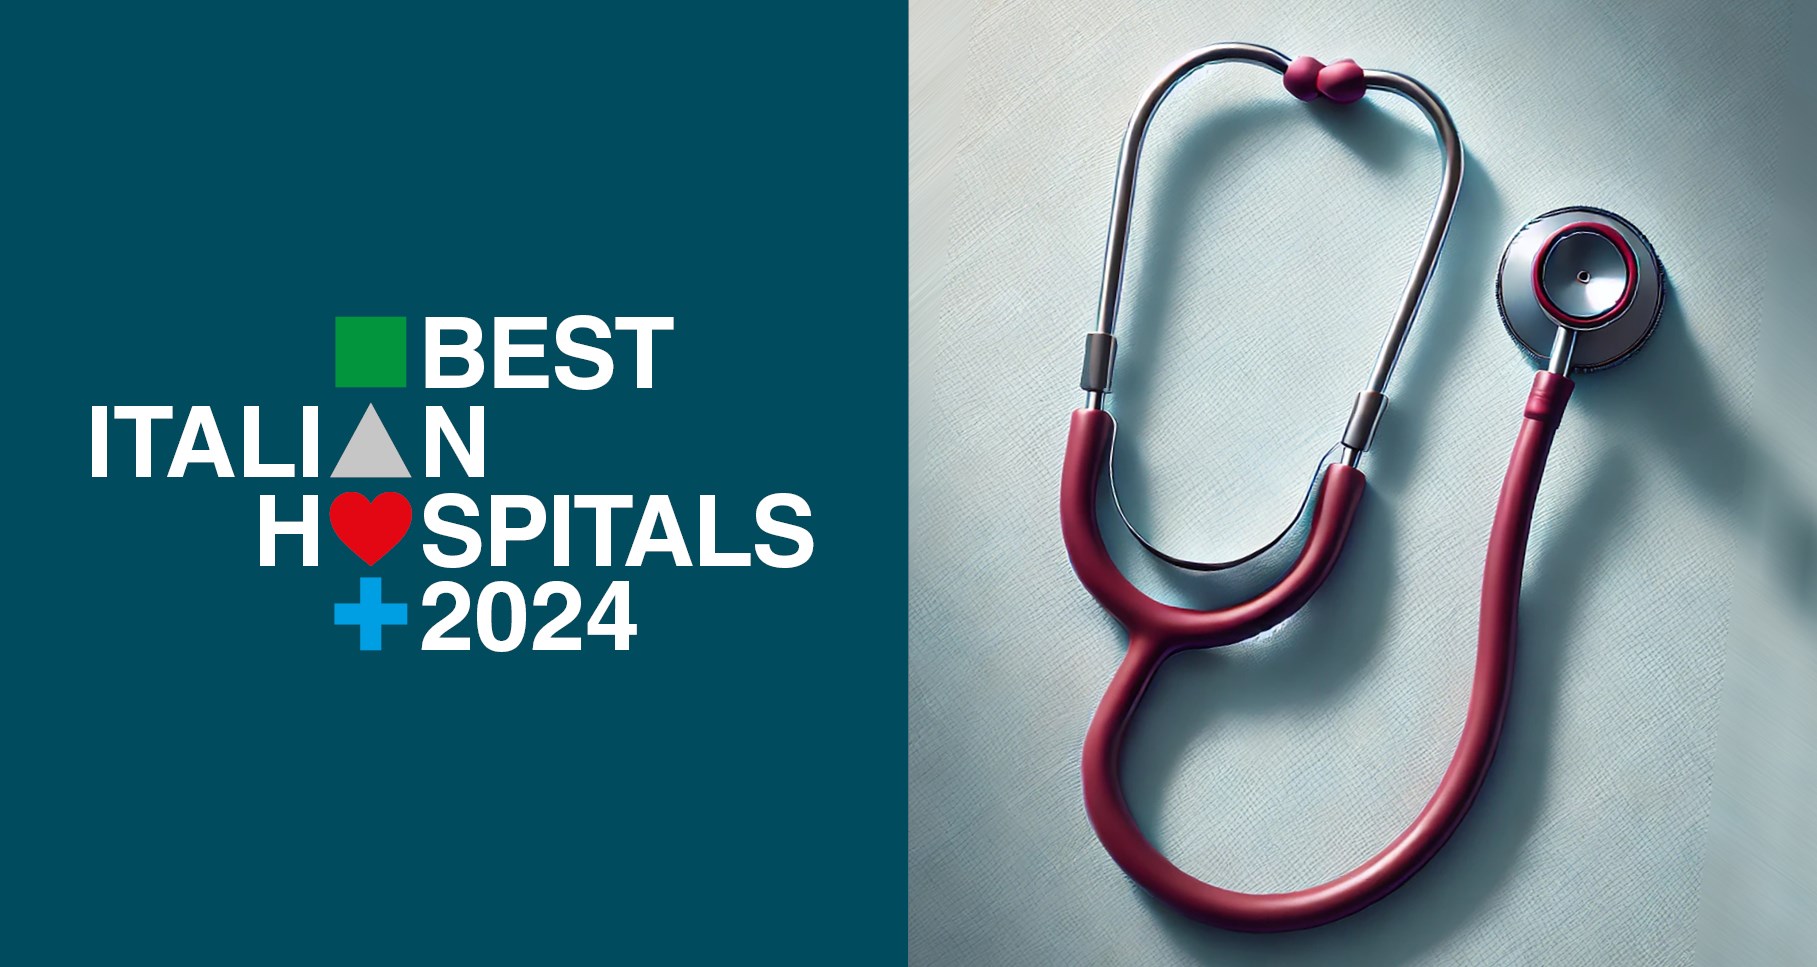 Best Italian Hospitals 2024